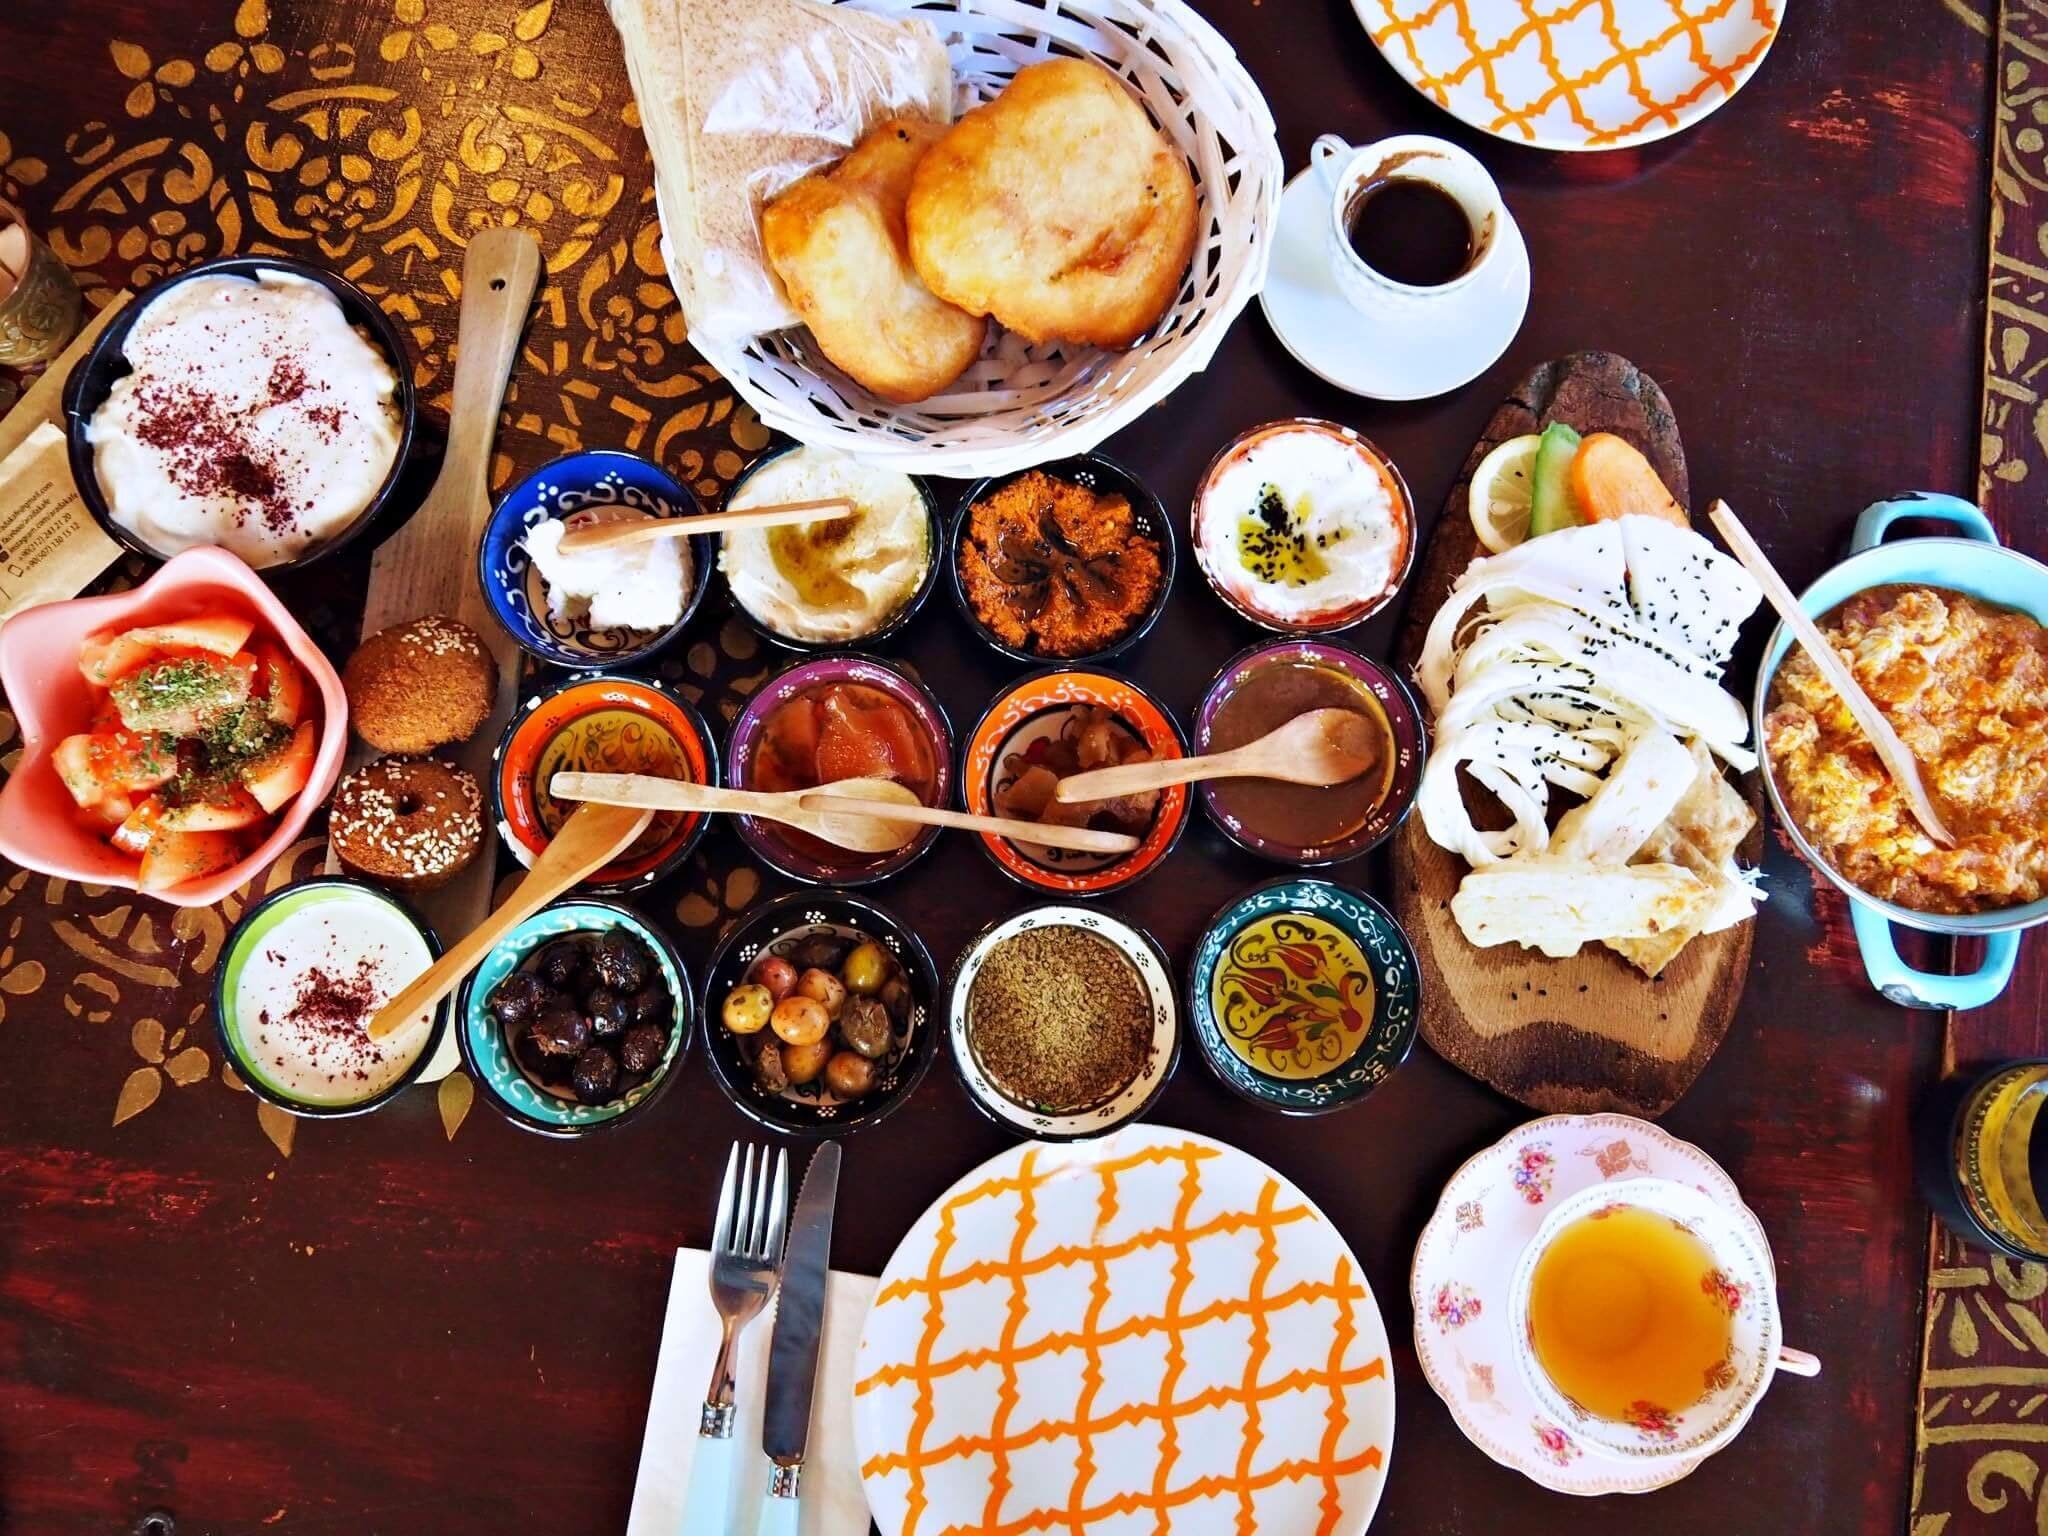 https://images.squarespace-cdn.com/content/v1/5a2915cebff20052a88638f2/1583999155256-O12DLNM7OYM6Z7SV7KYB/Arada+cafe+Istanbul+Turkish+breakfast